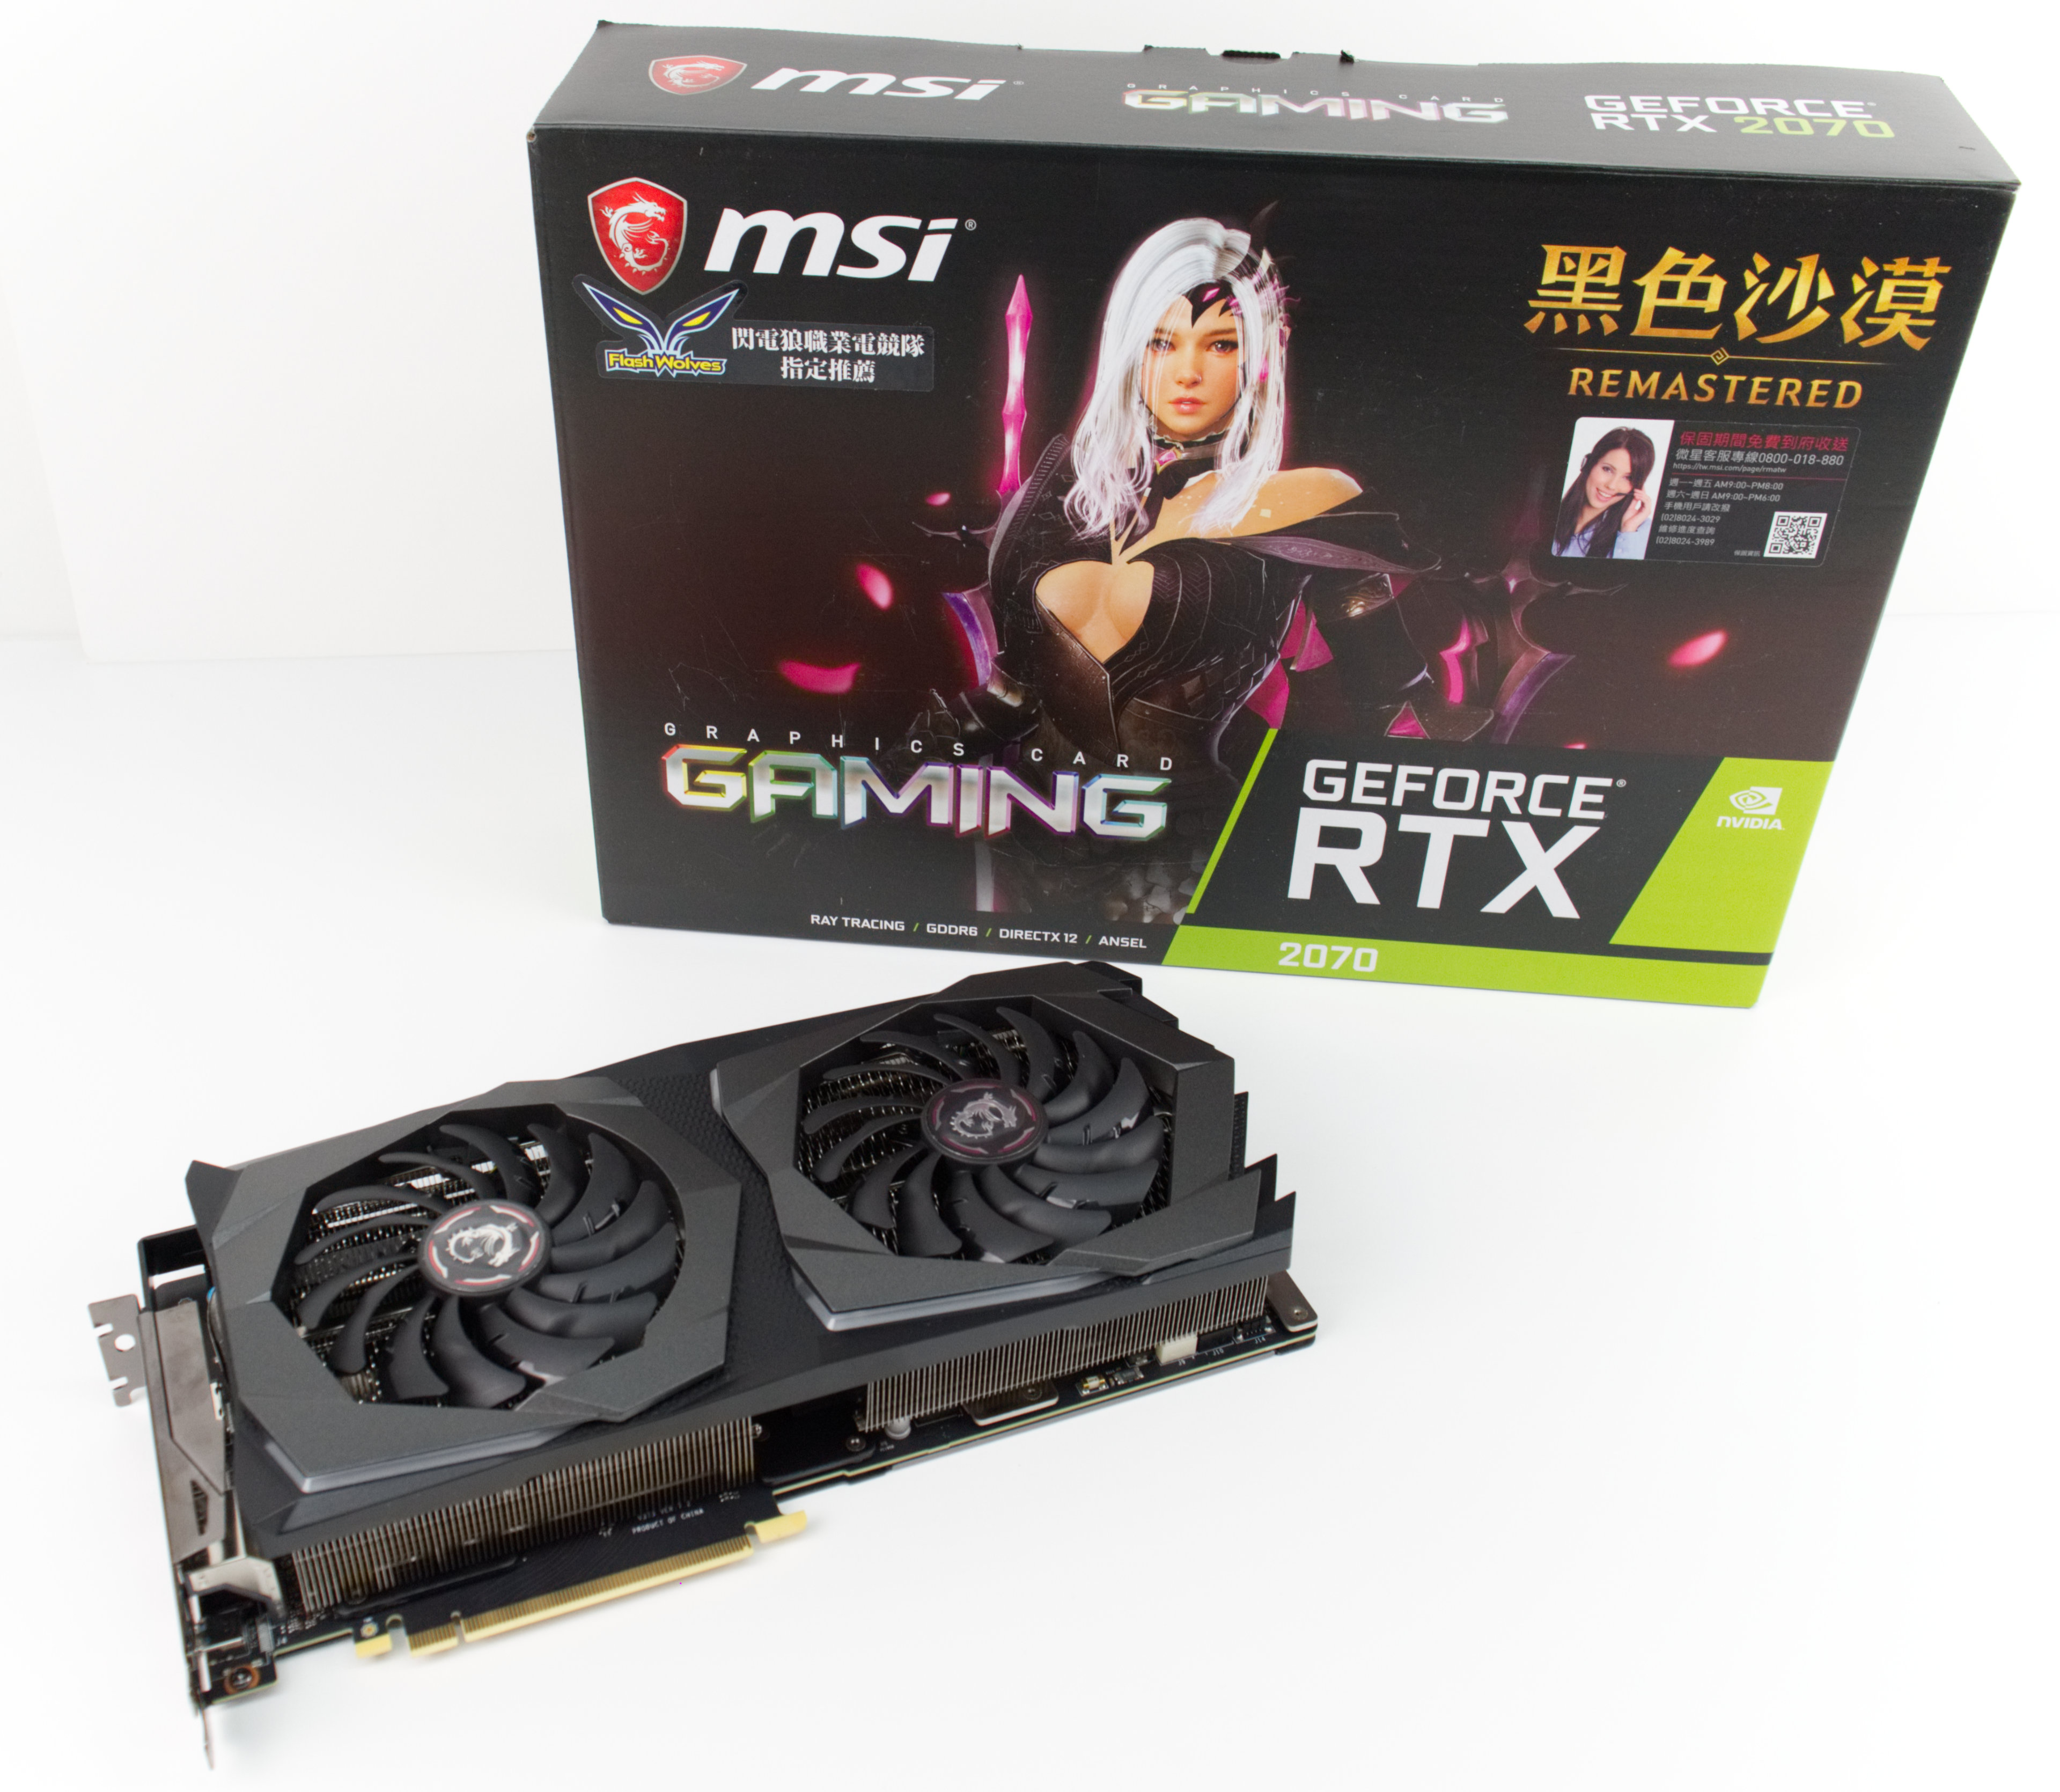 MSI RTX 2070 Gaming Z 8G Desktop GPU review - NotebookCheck.net Reviews